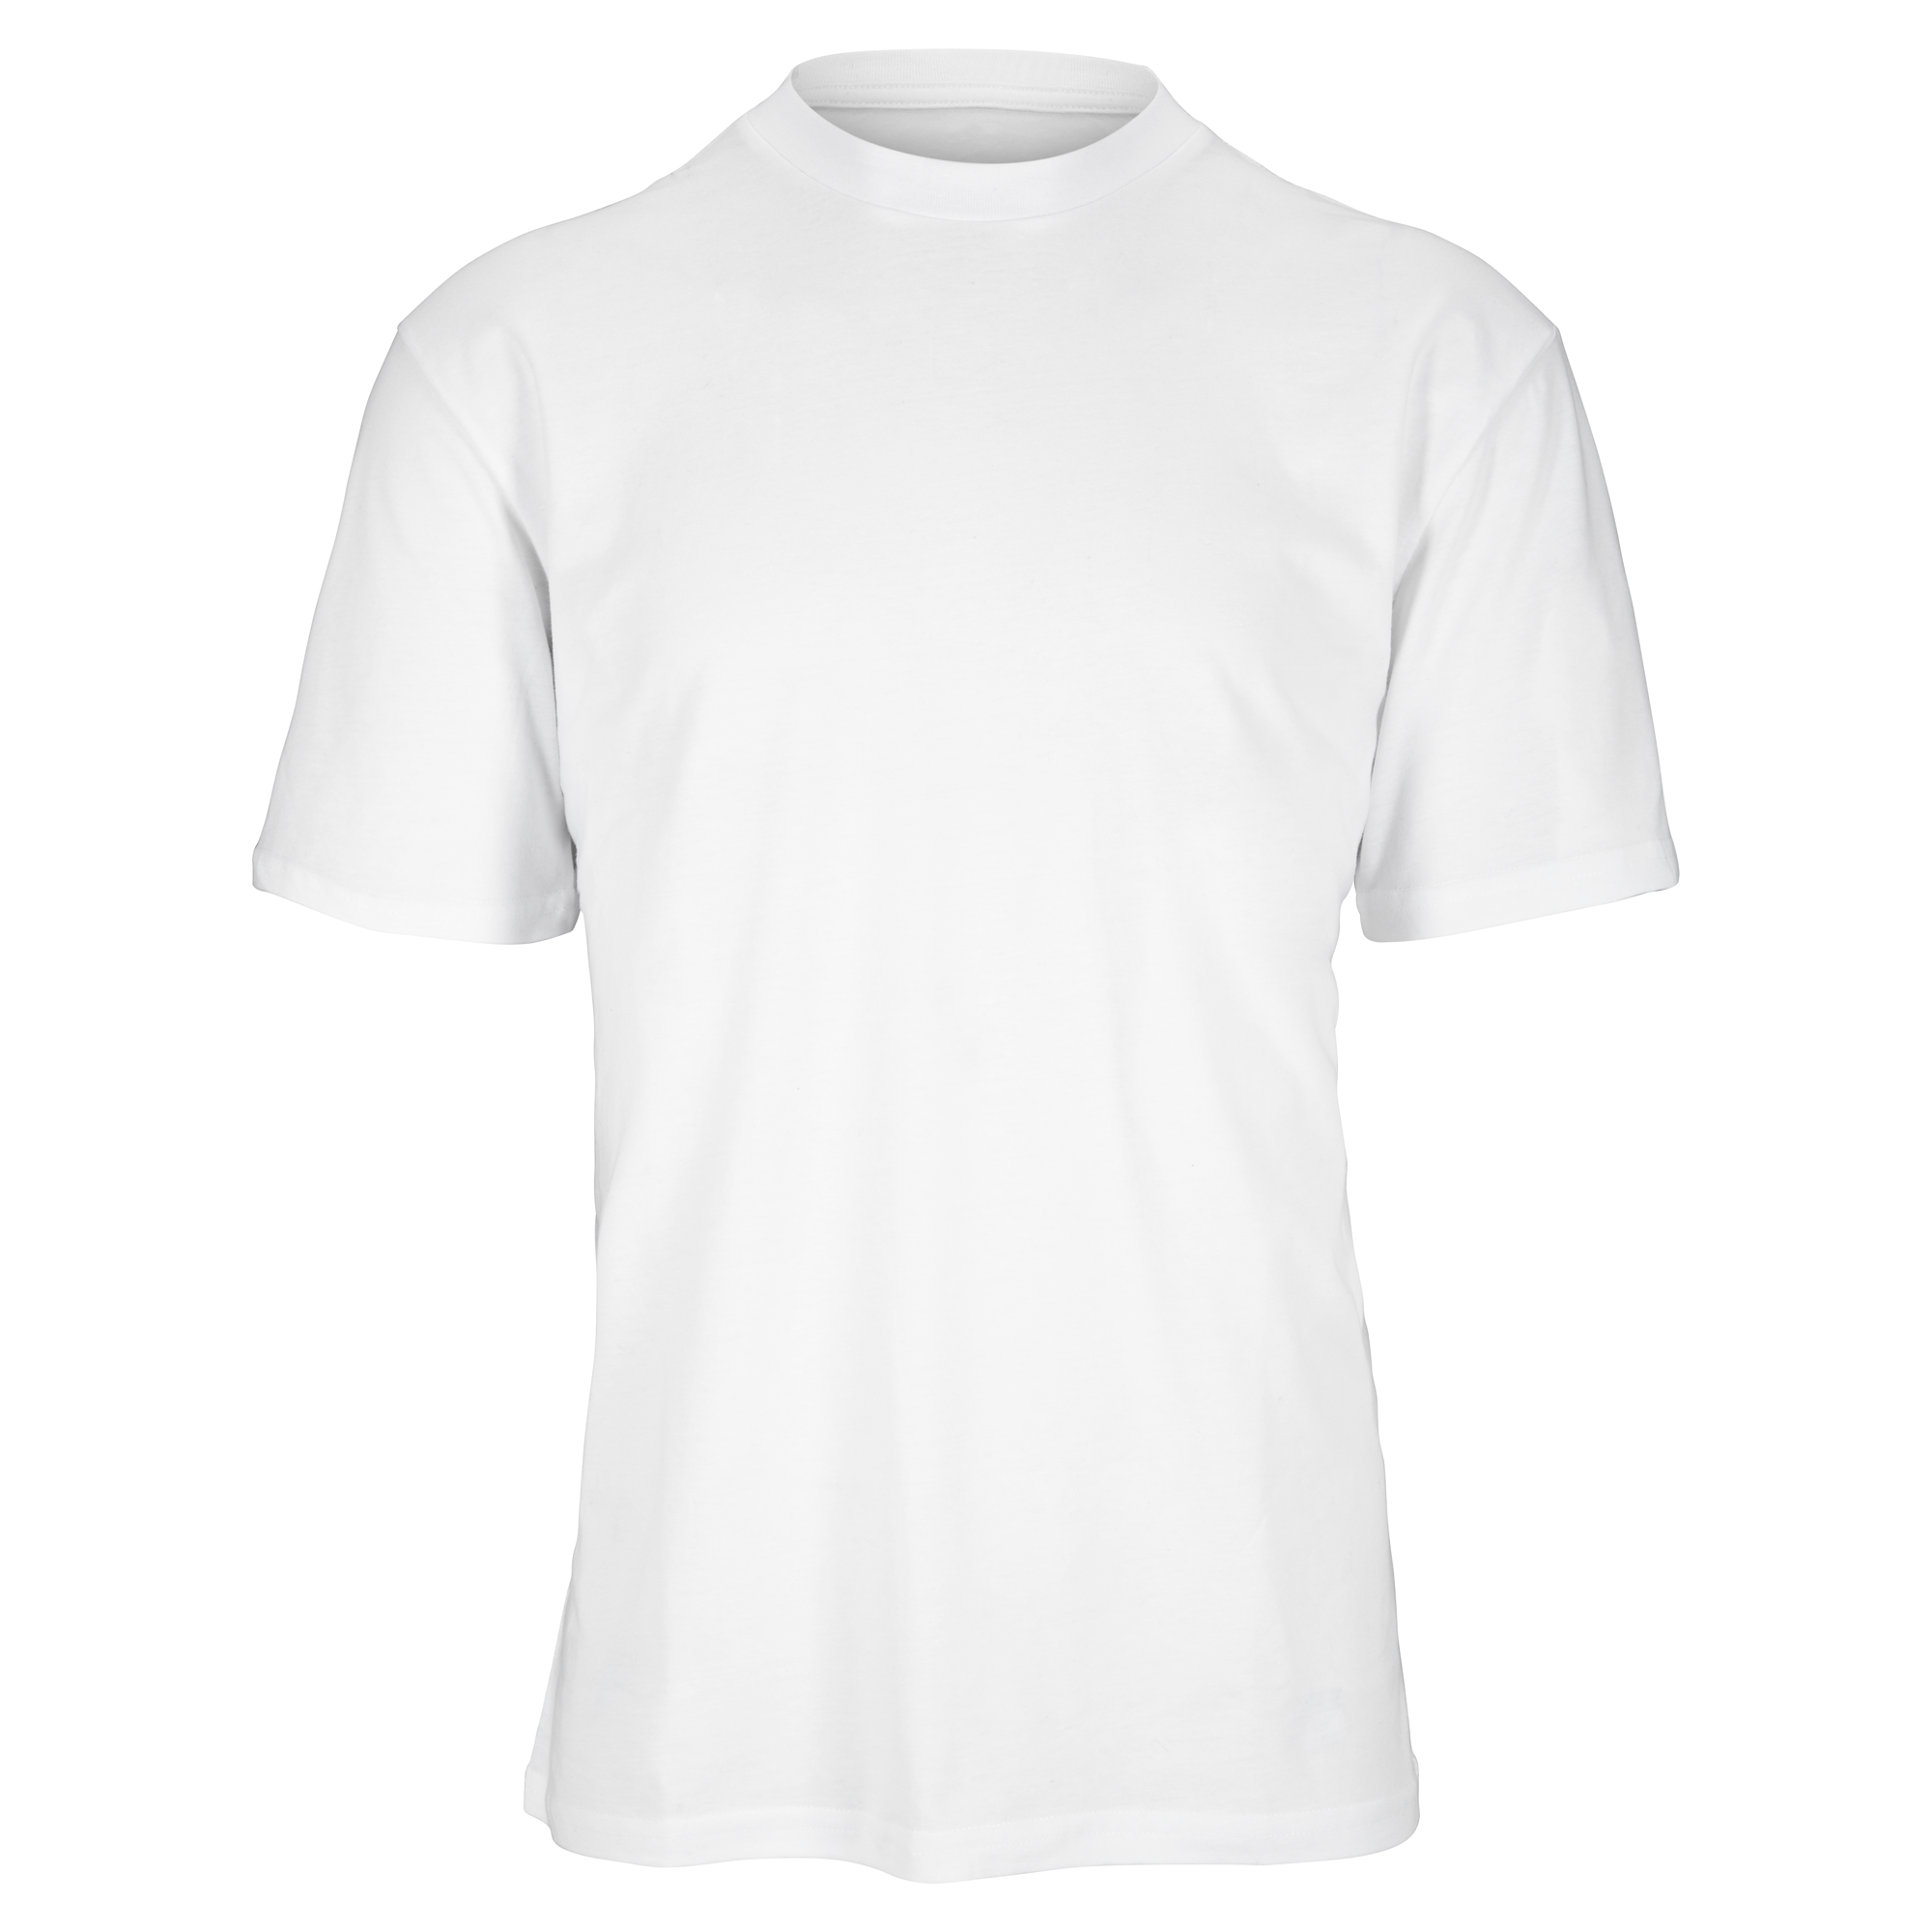 Herren-T-Shirt weiß 2er-Pack (52/54) L